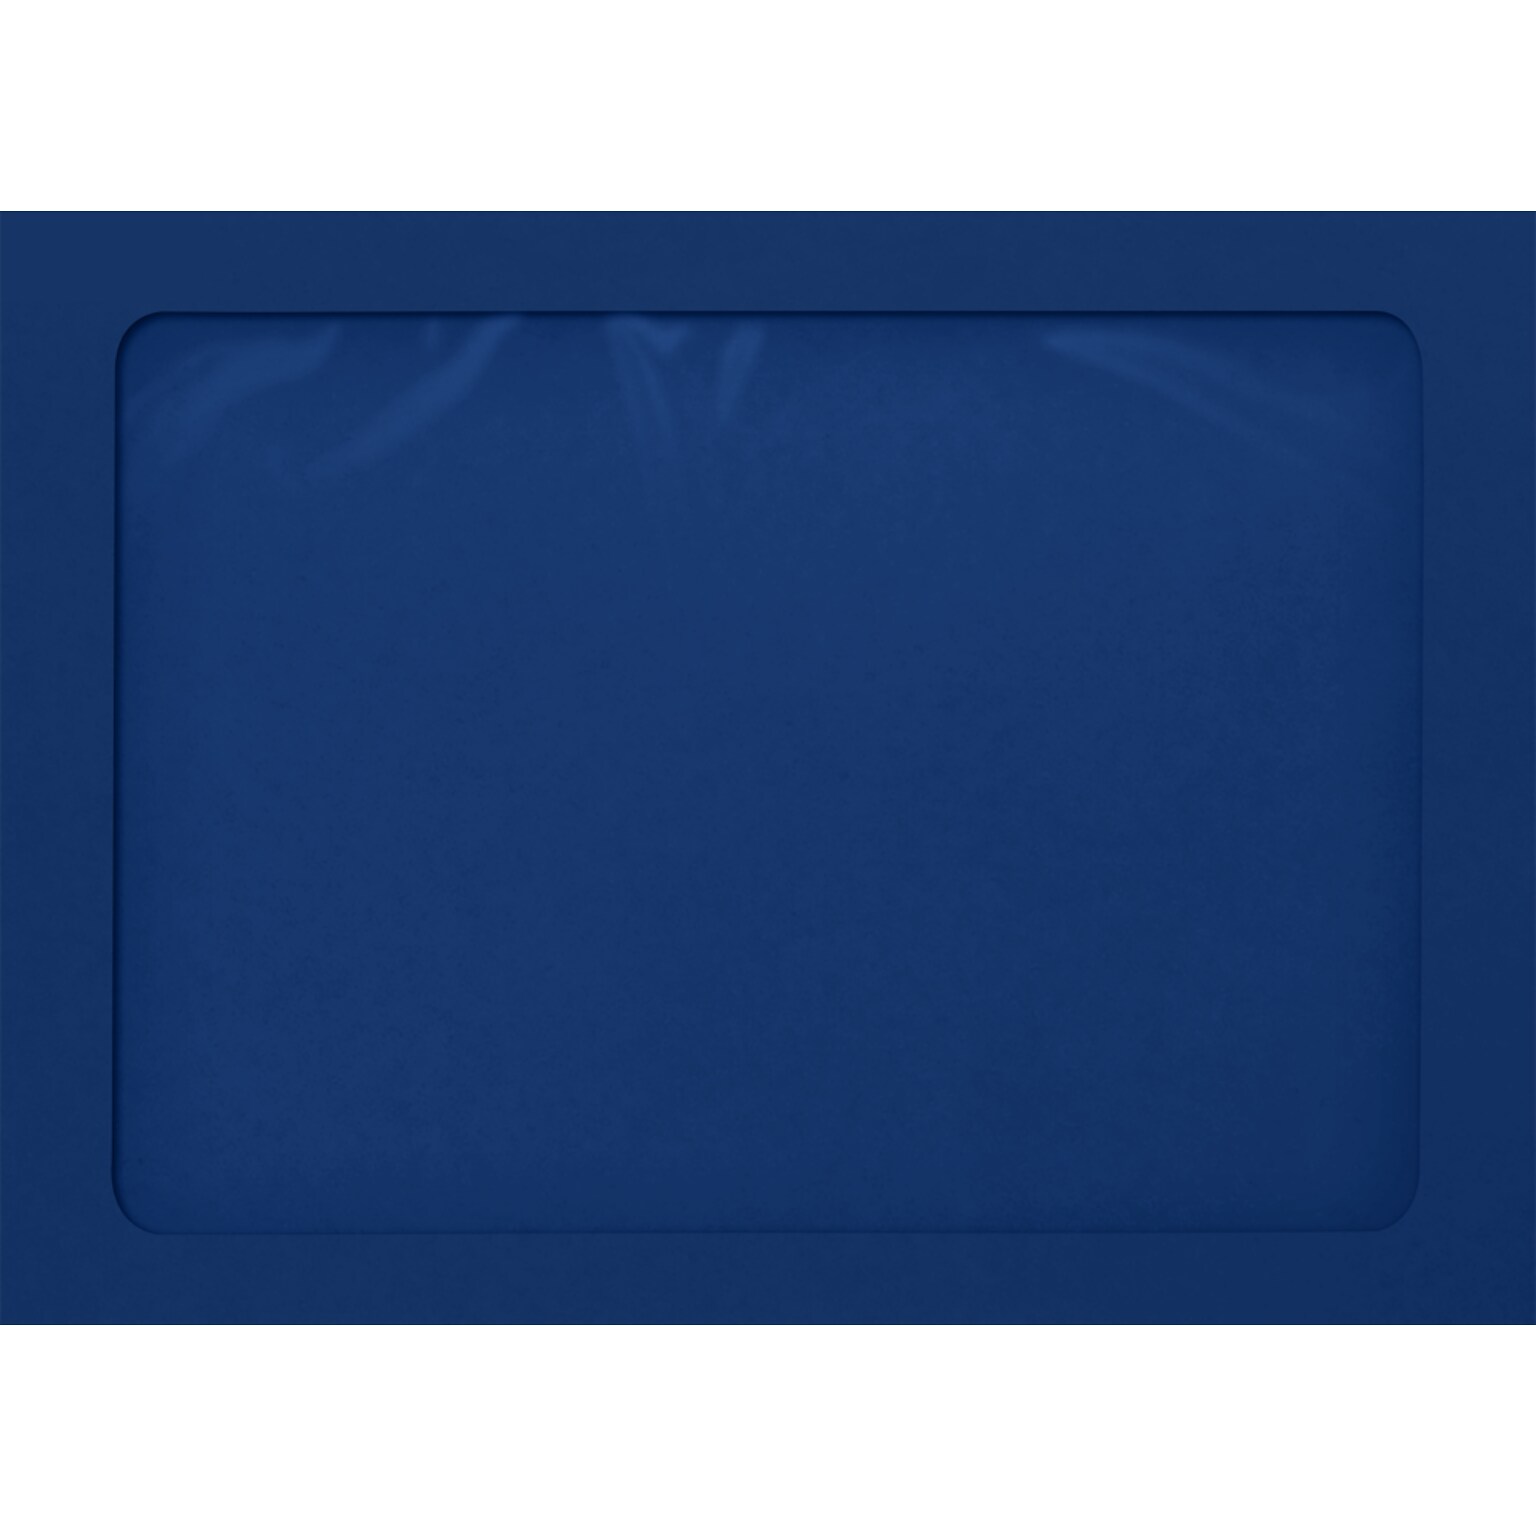 JAM Paper A7 Full Face Window Envelopes, Peel & Press, 5 1/4 x 7 1/4, Navy Blue, 50 Pack (A7FFW-196-50)